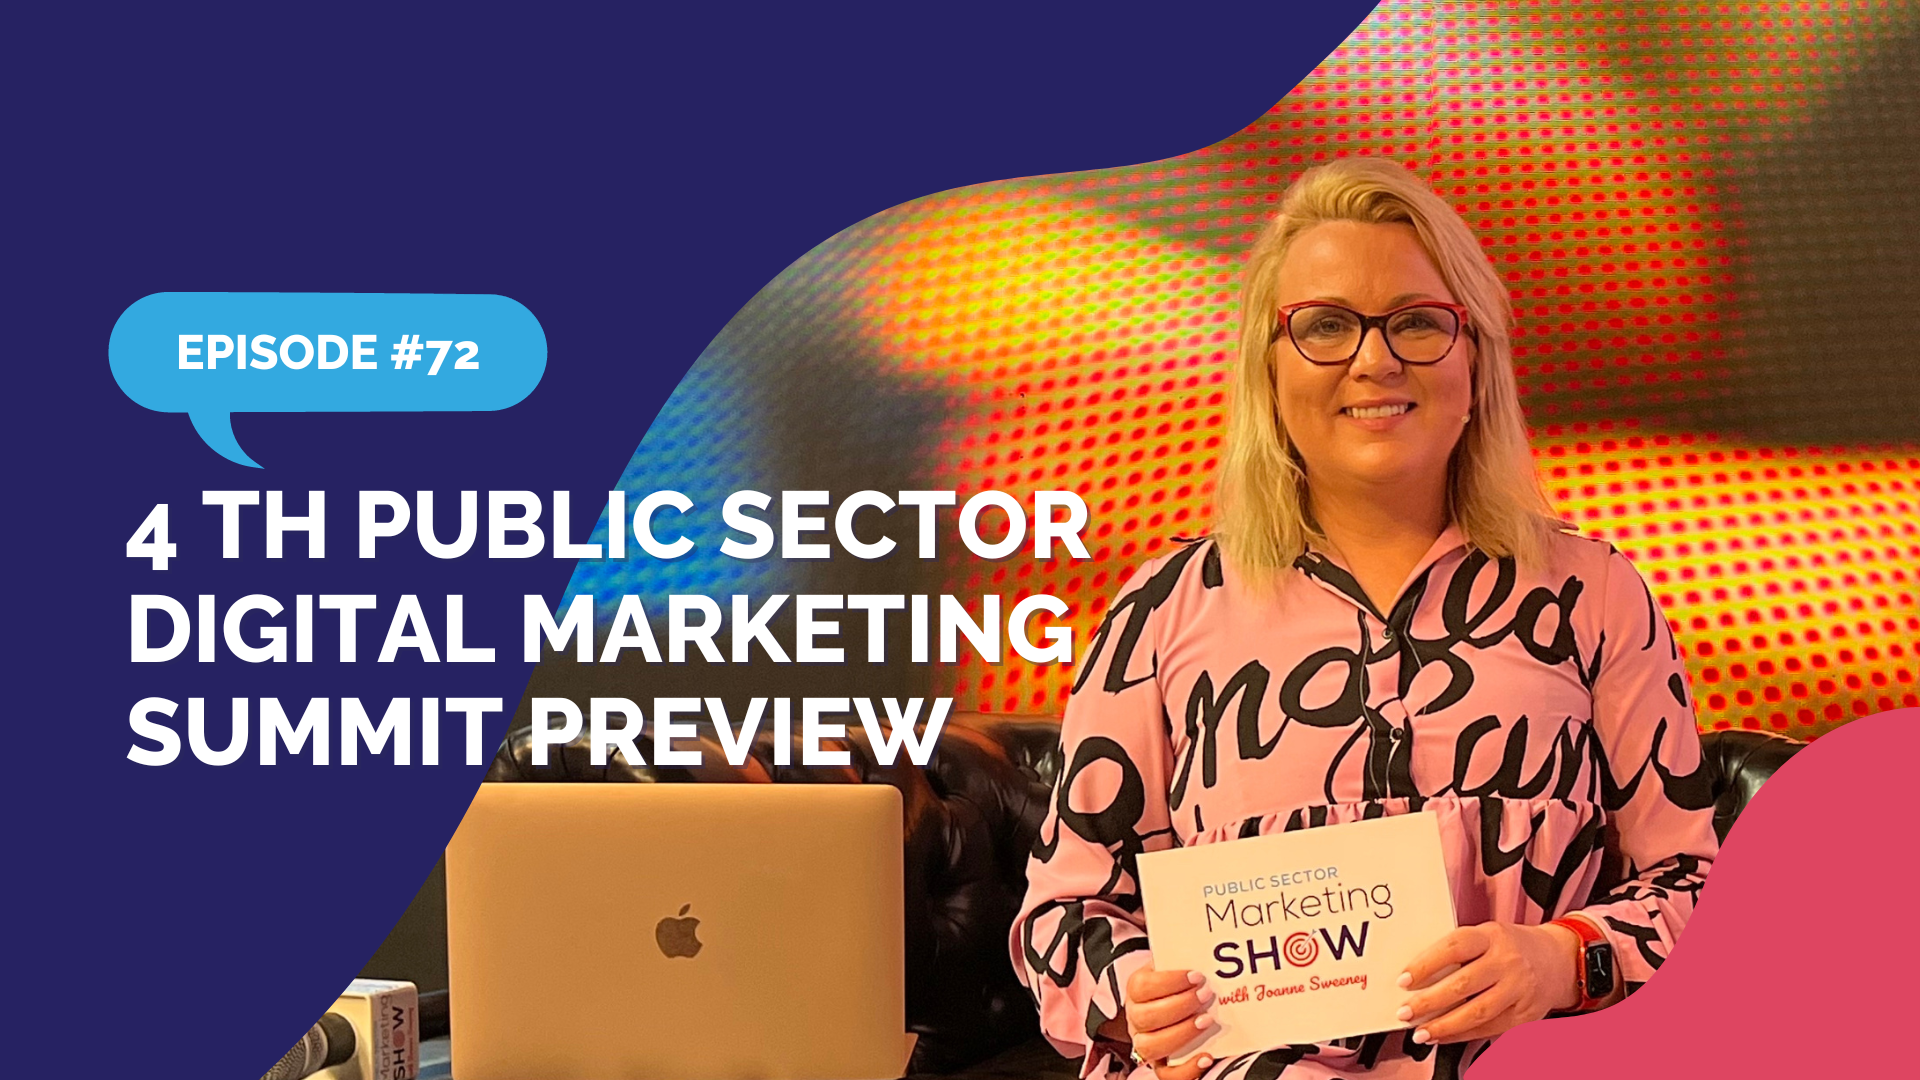 Episode 72 - The 4th Public Sector Digital Marketing Summit